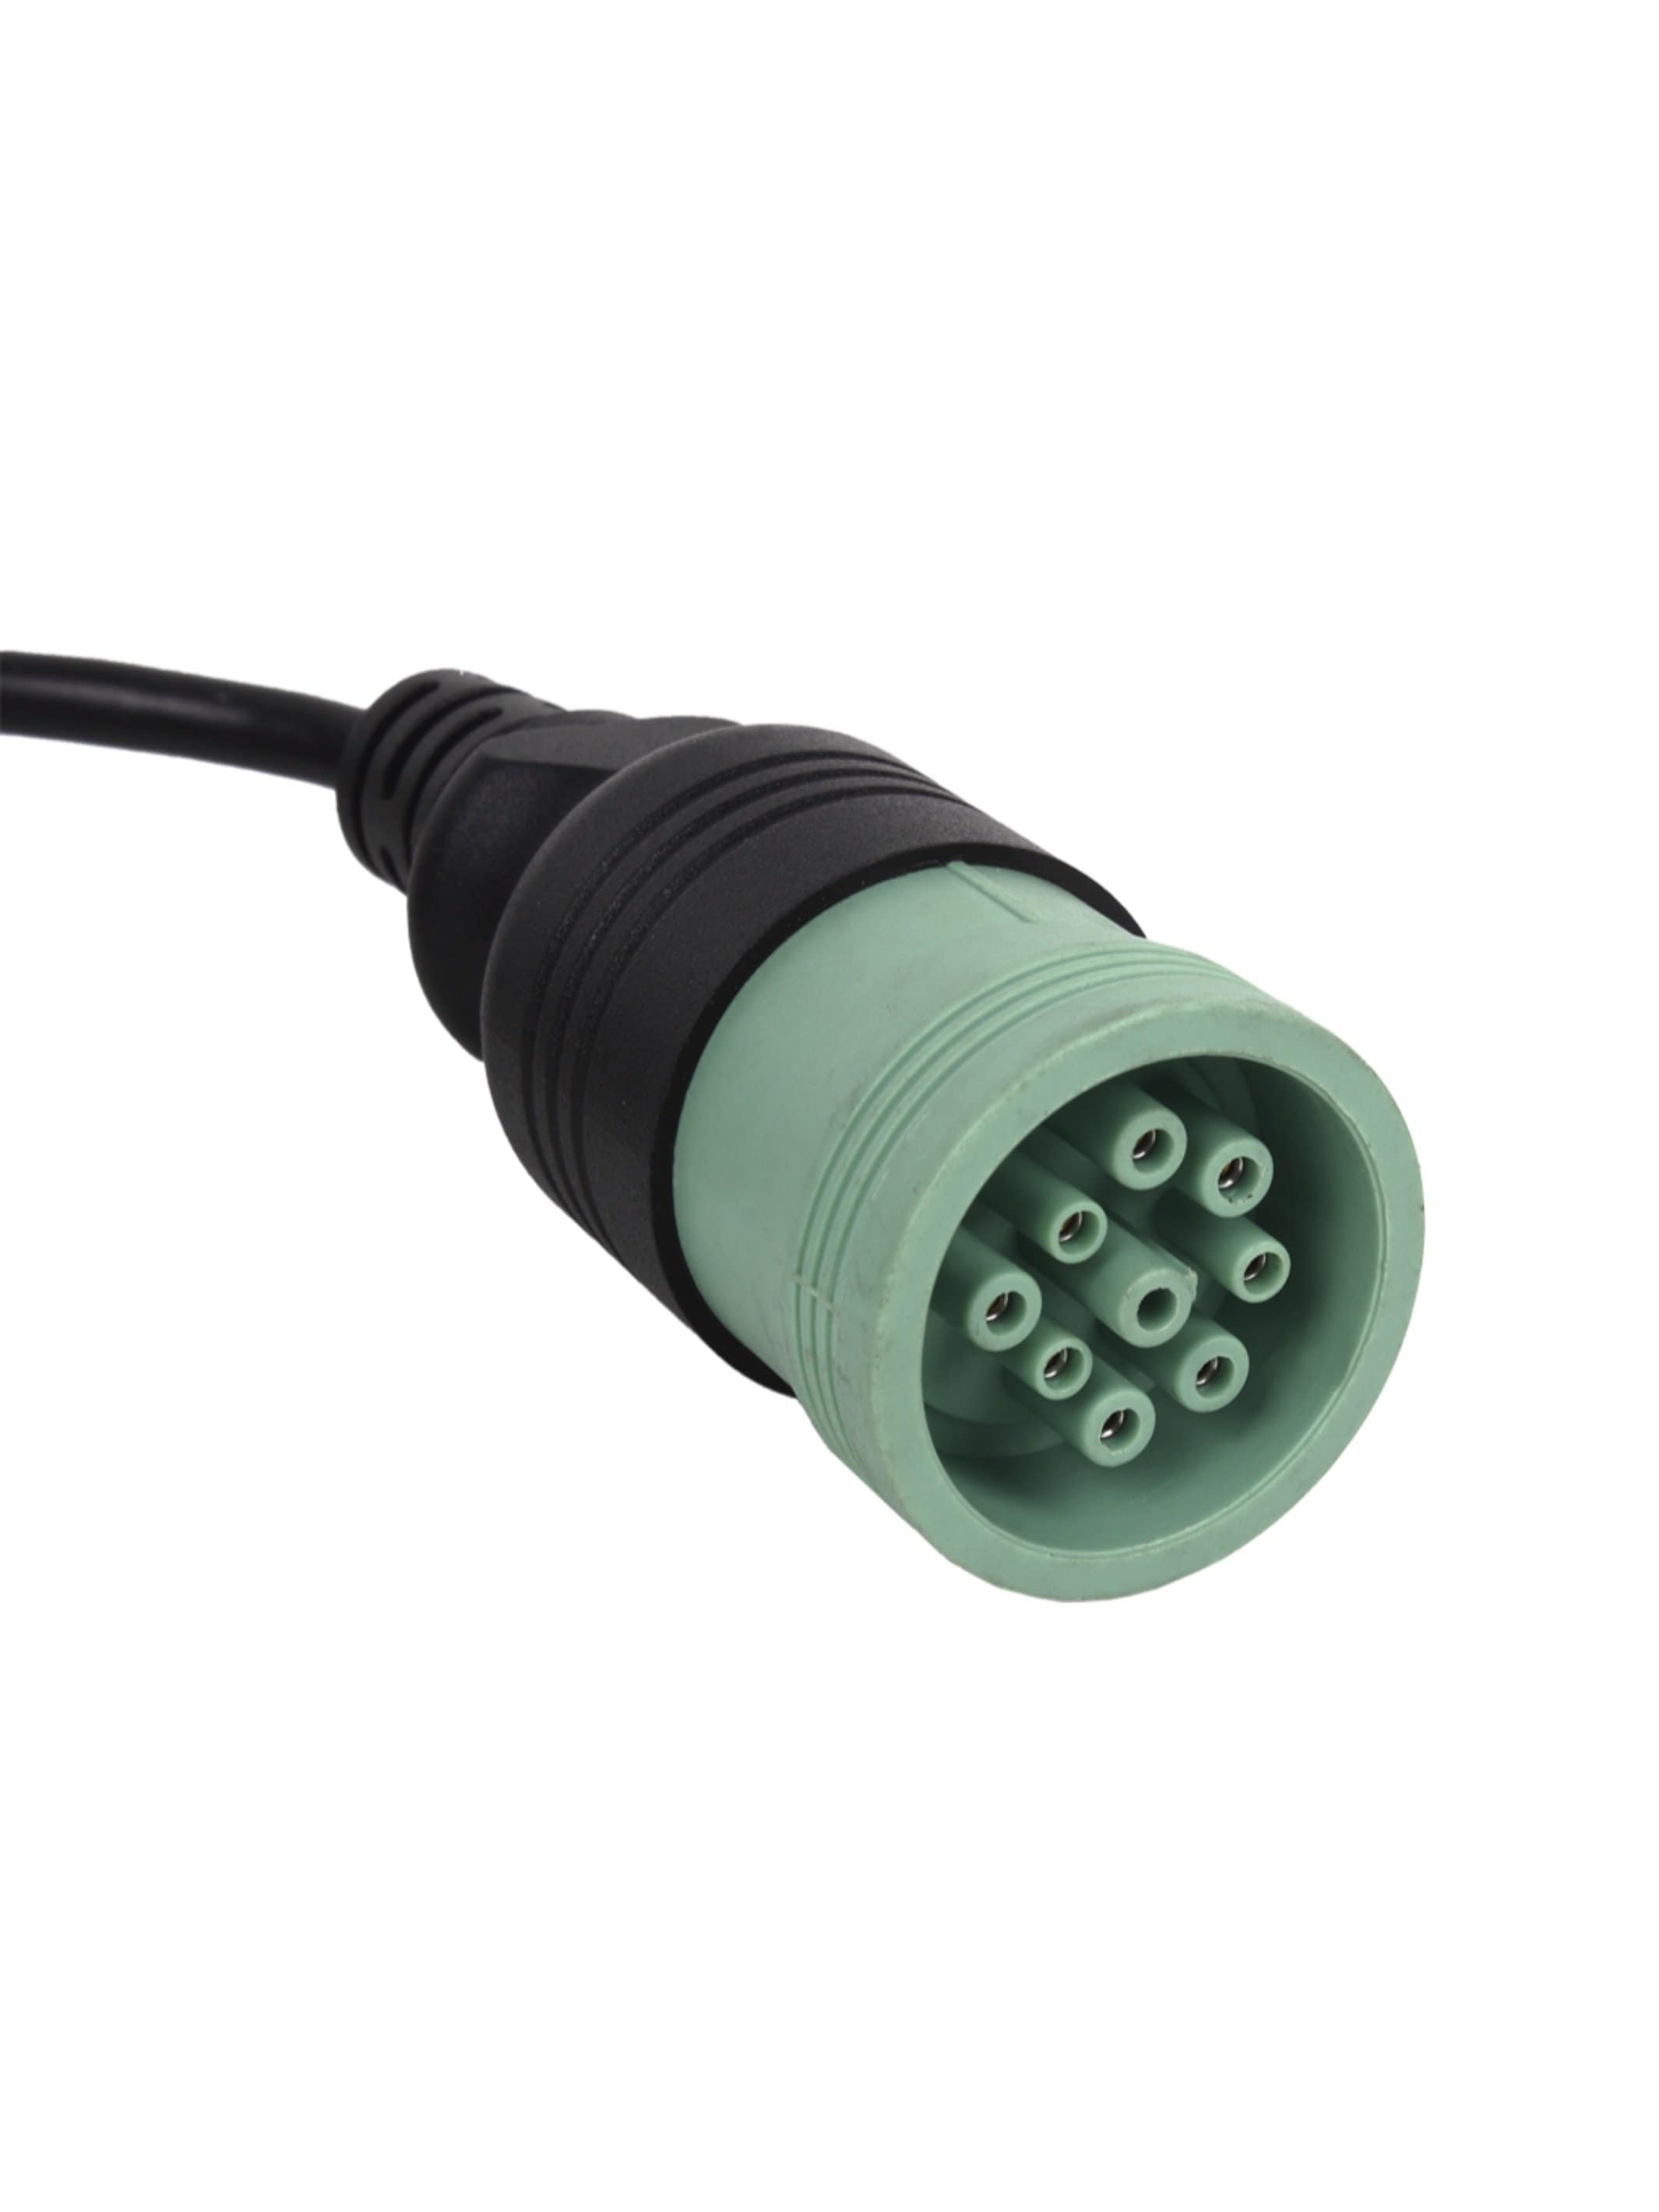 Deutsch 9 Pin Type 2 Green Diagnostic Cable - Jaltest JDC217.9